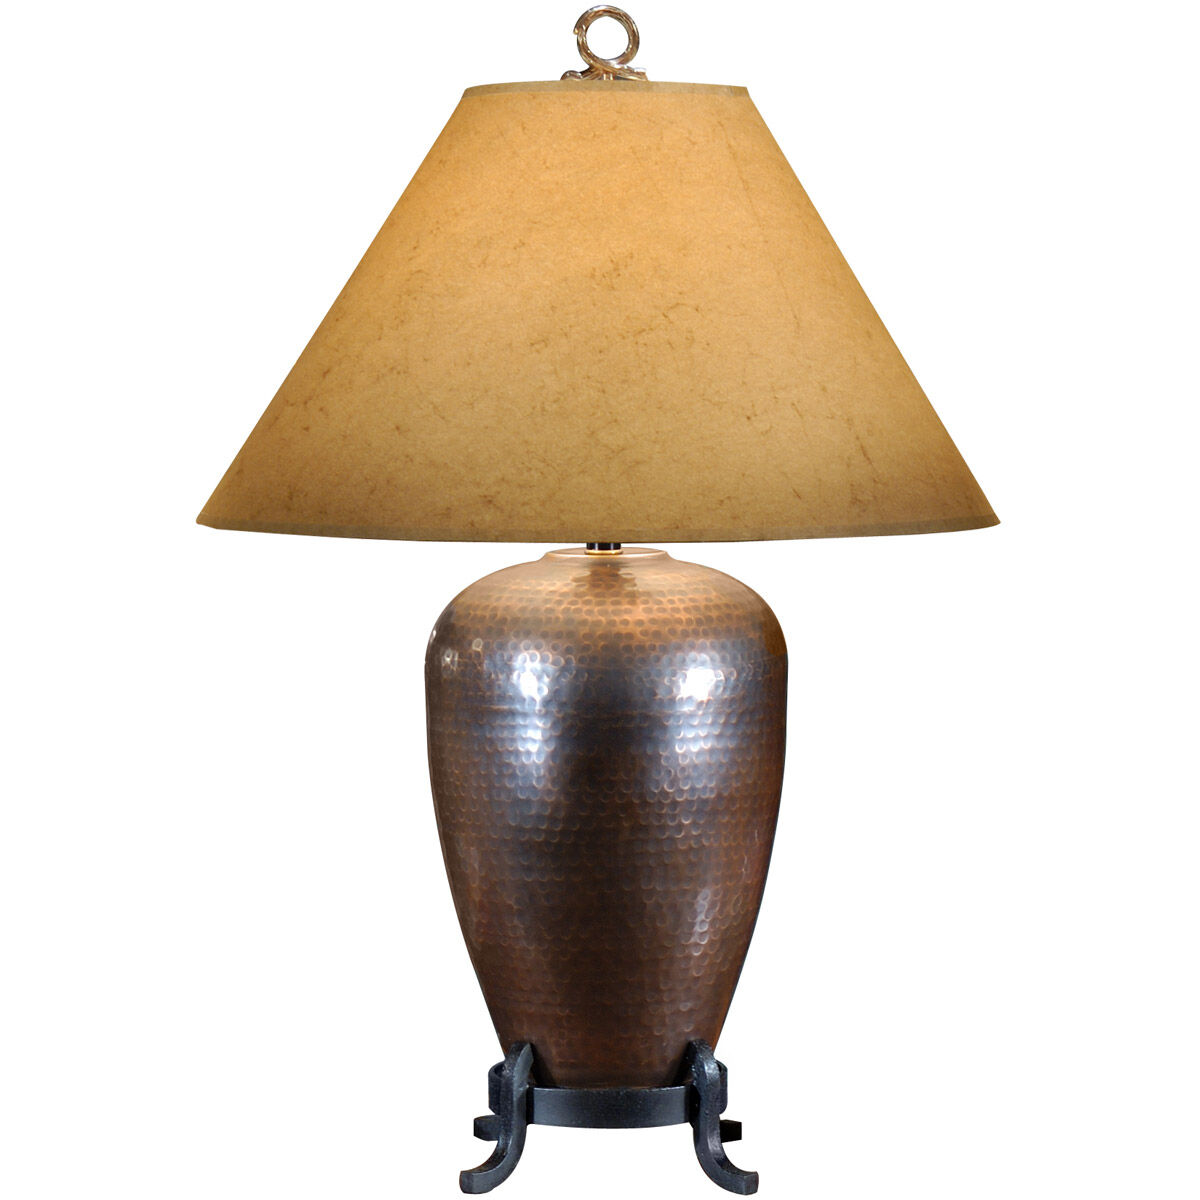 Rustic Modern Table Lamp